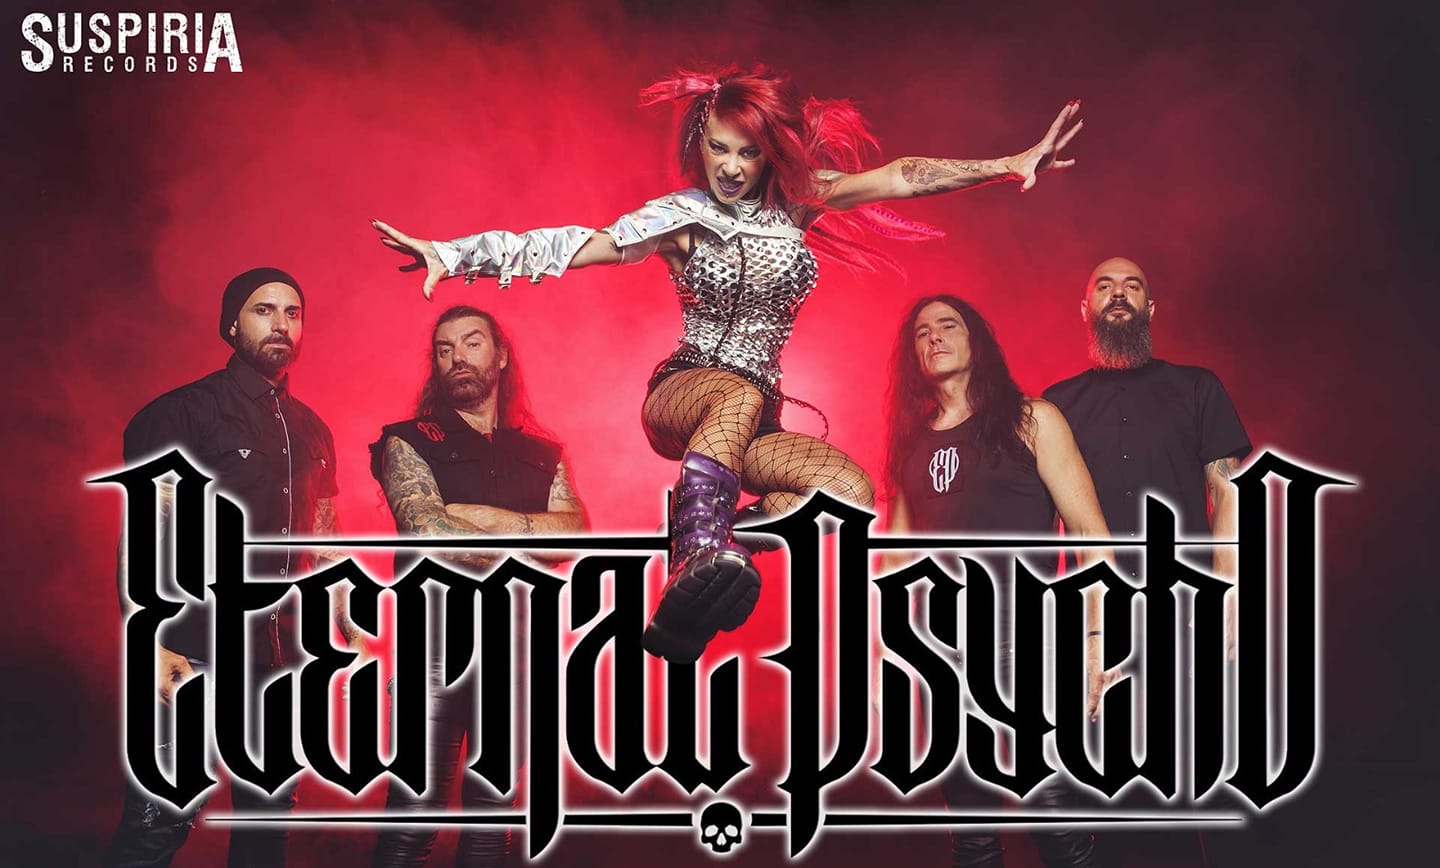 Eternal Psycho ficha por Suspiria Records para publicar su próximo disco